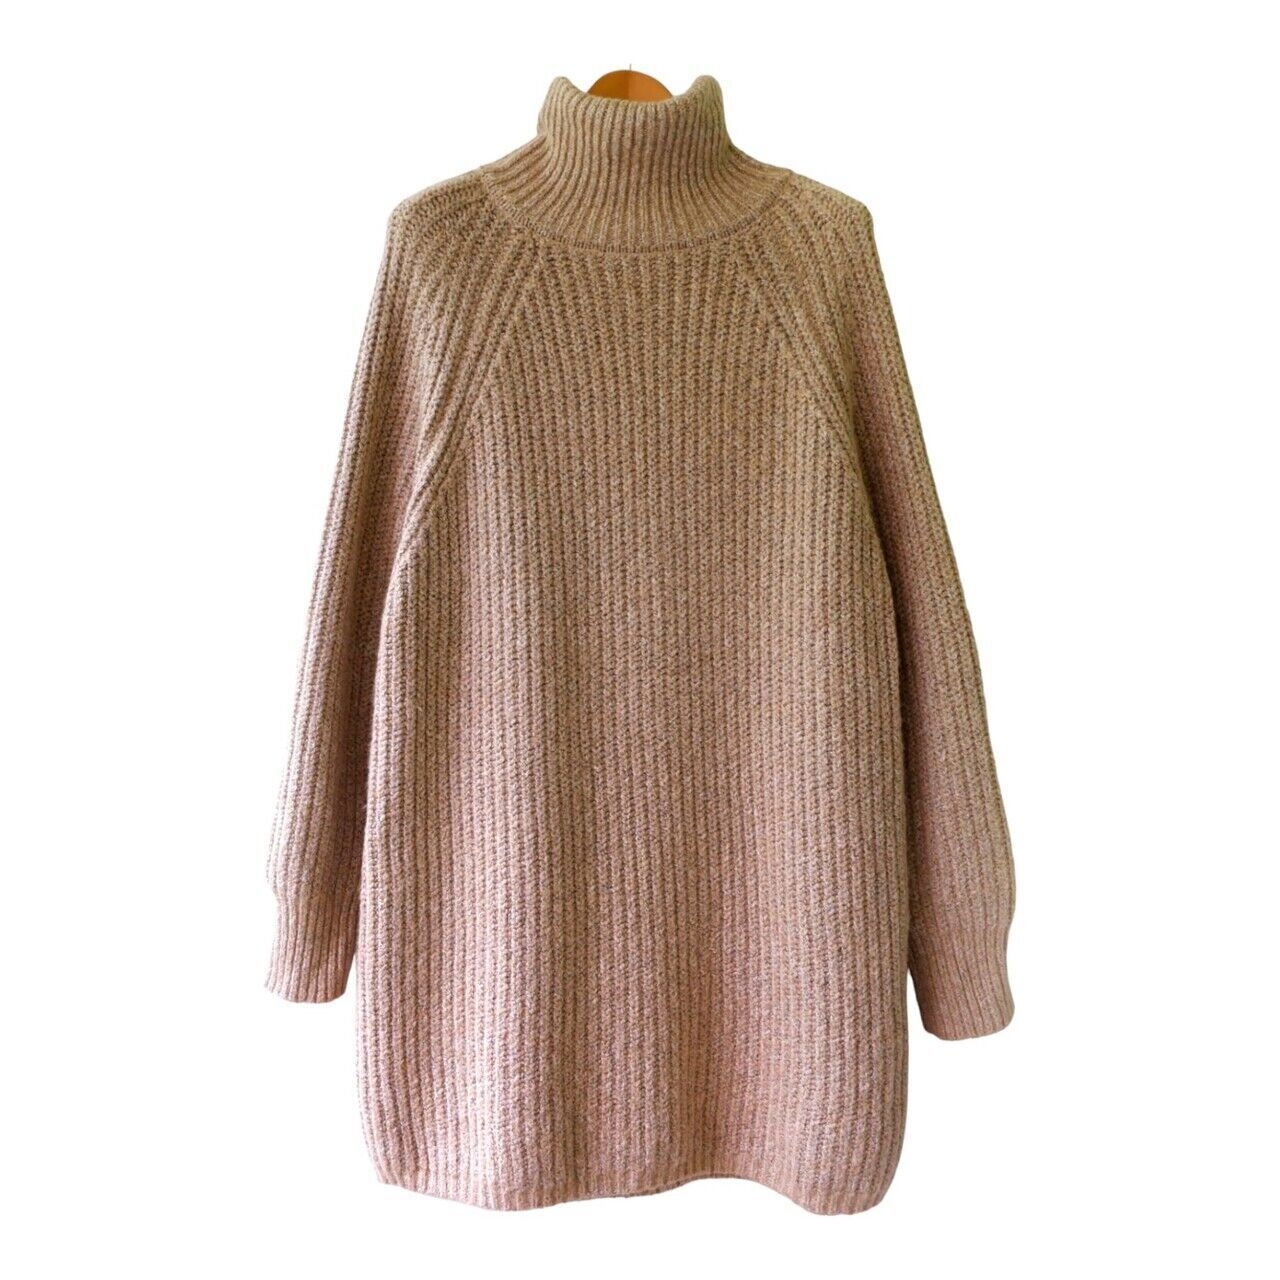 Asos Light Brown Sweater Dress